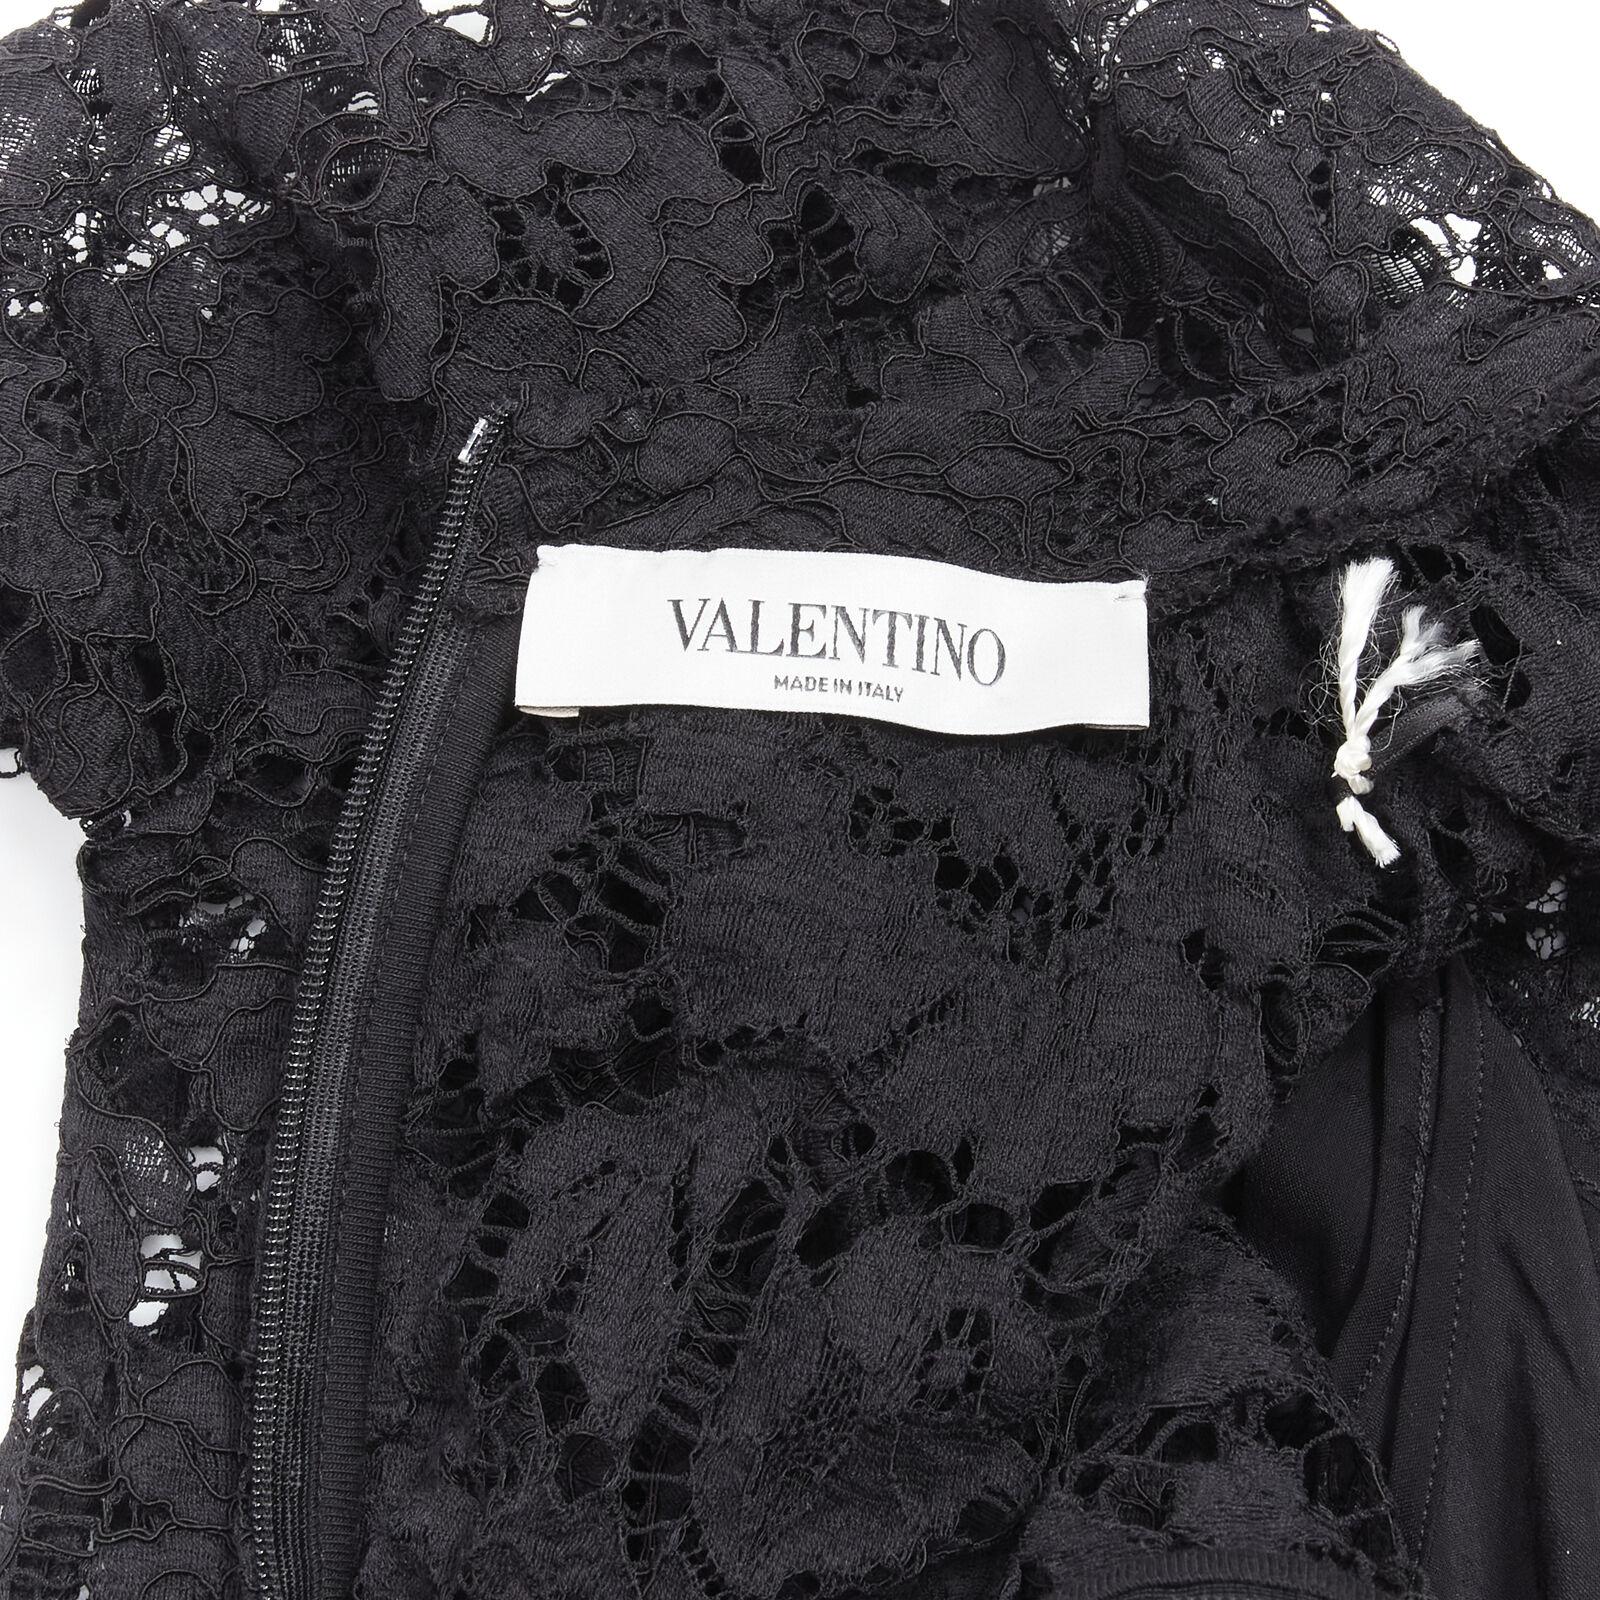 VALENTINO VLTN logo black lace white full floral lace playsuit romper XS For Sale 5